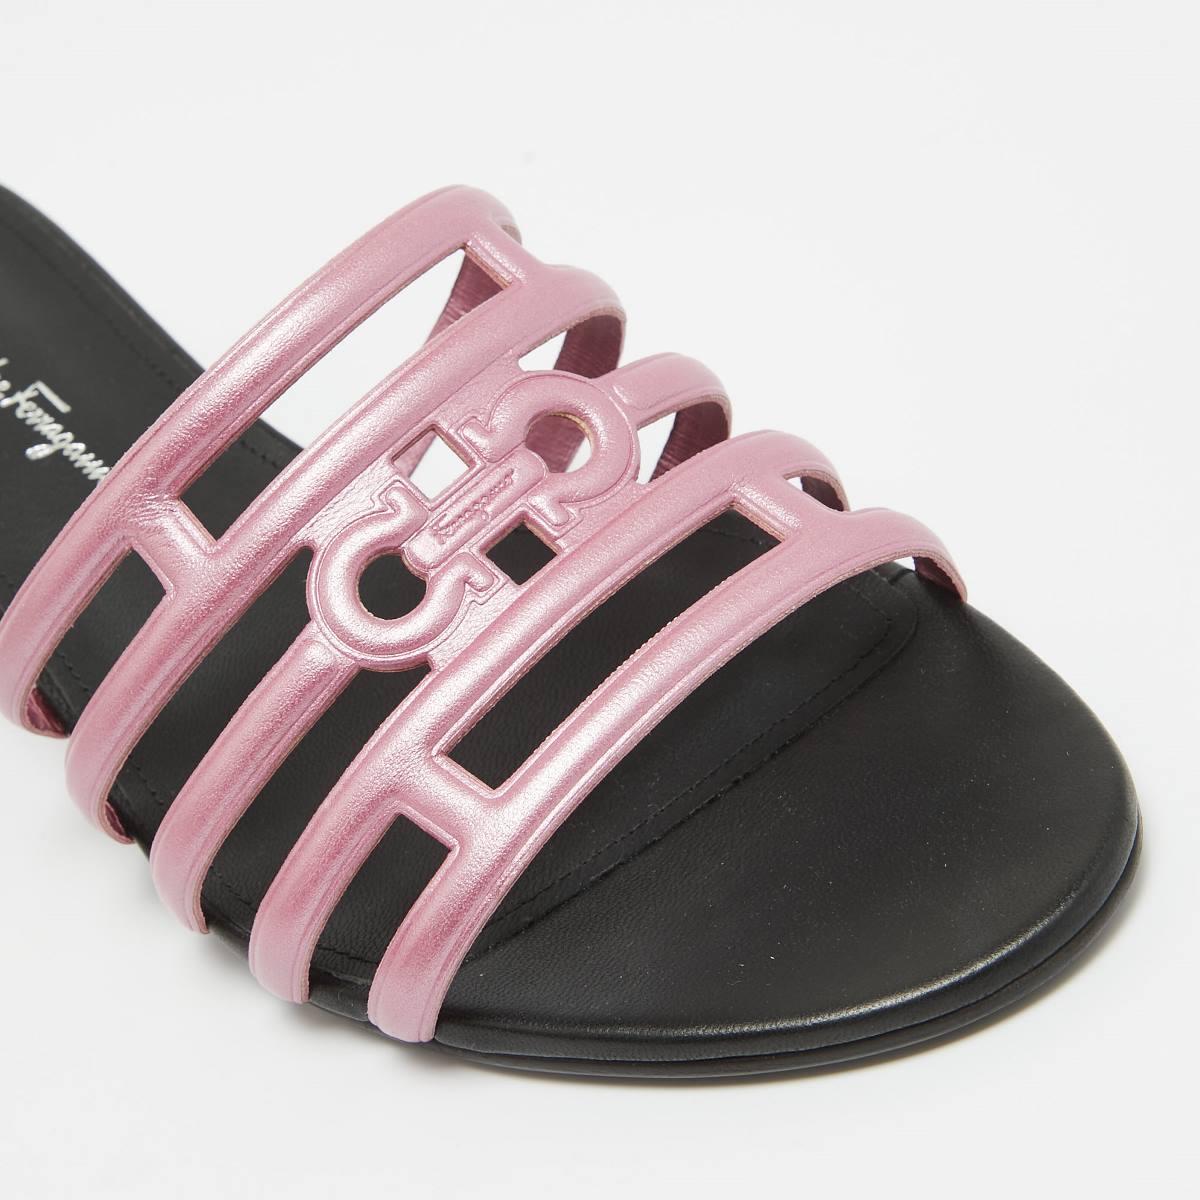 Salvatore Ferragamo Pink/Black Leather Finn Slide Sandals Size 39.5 1